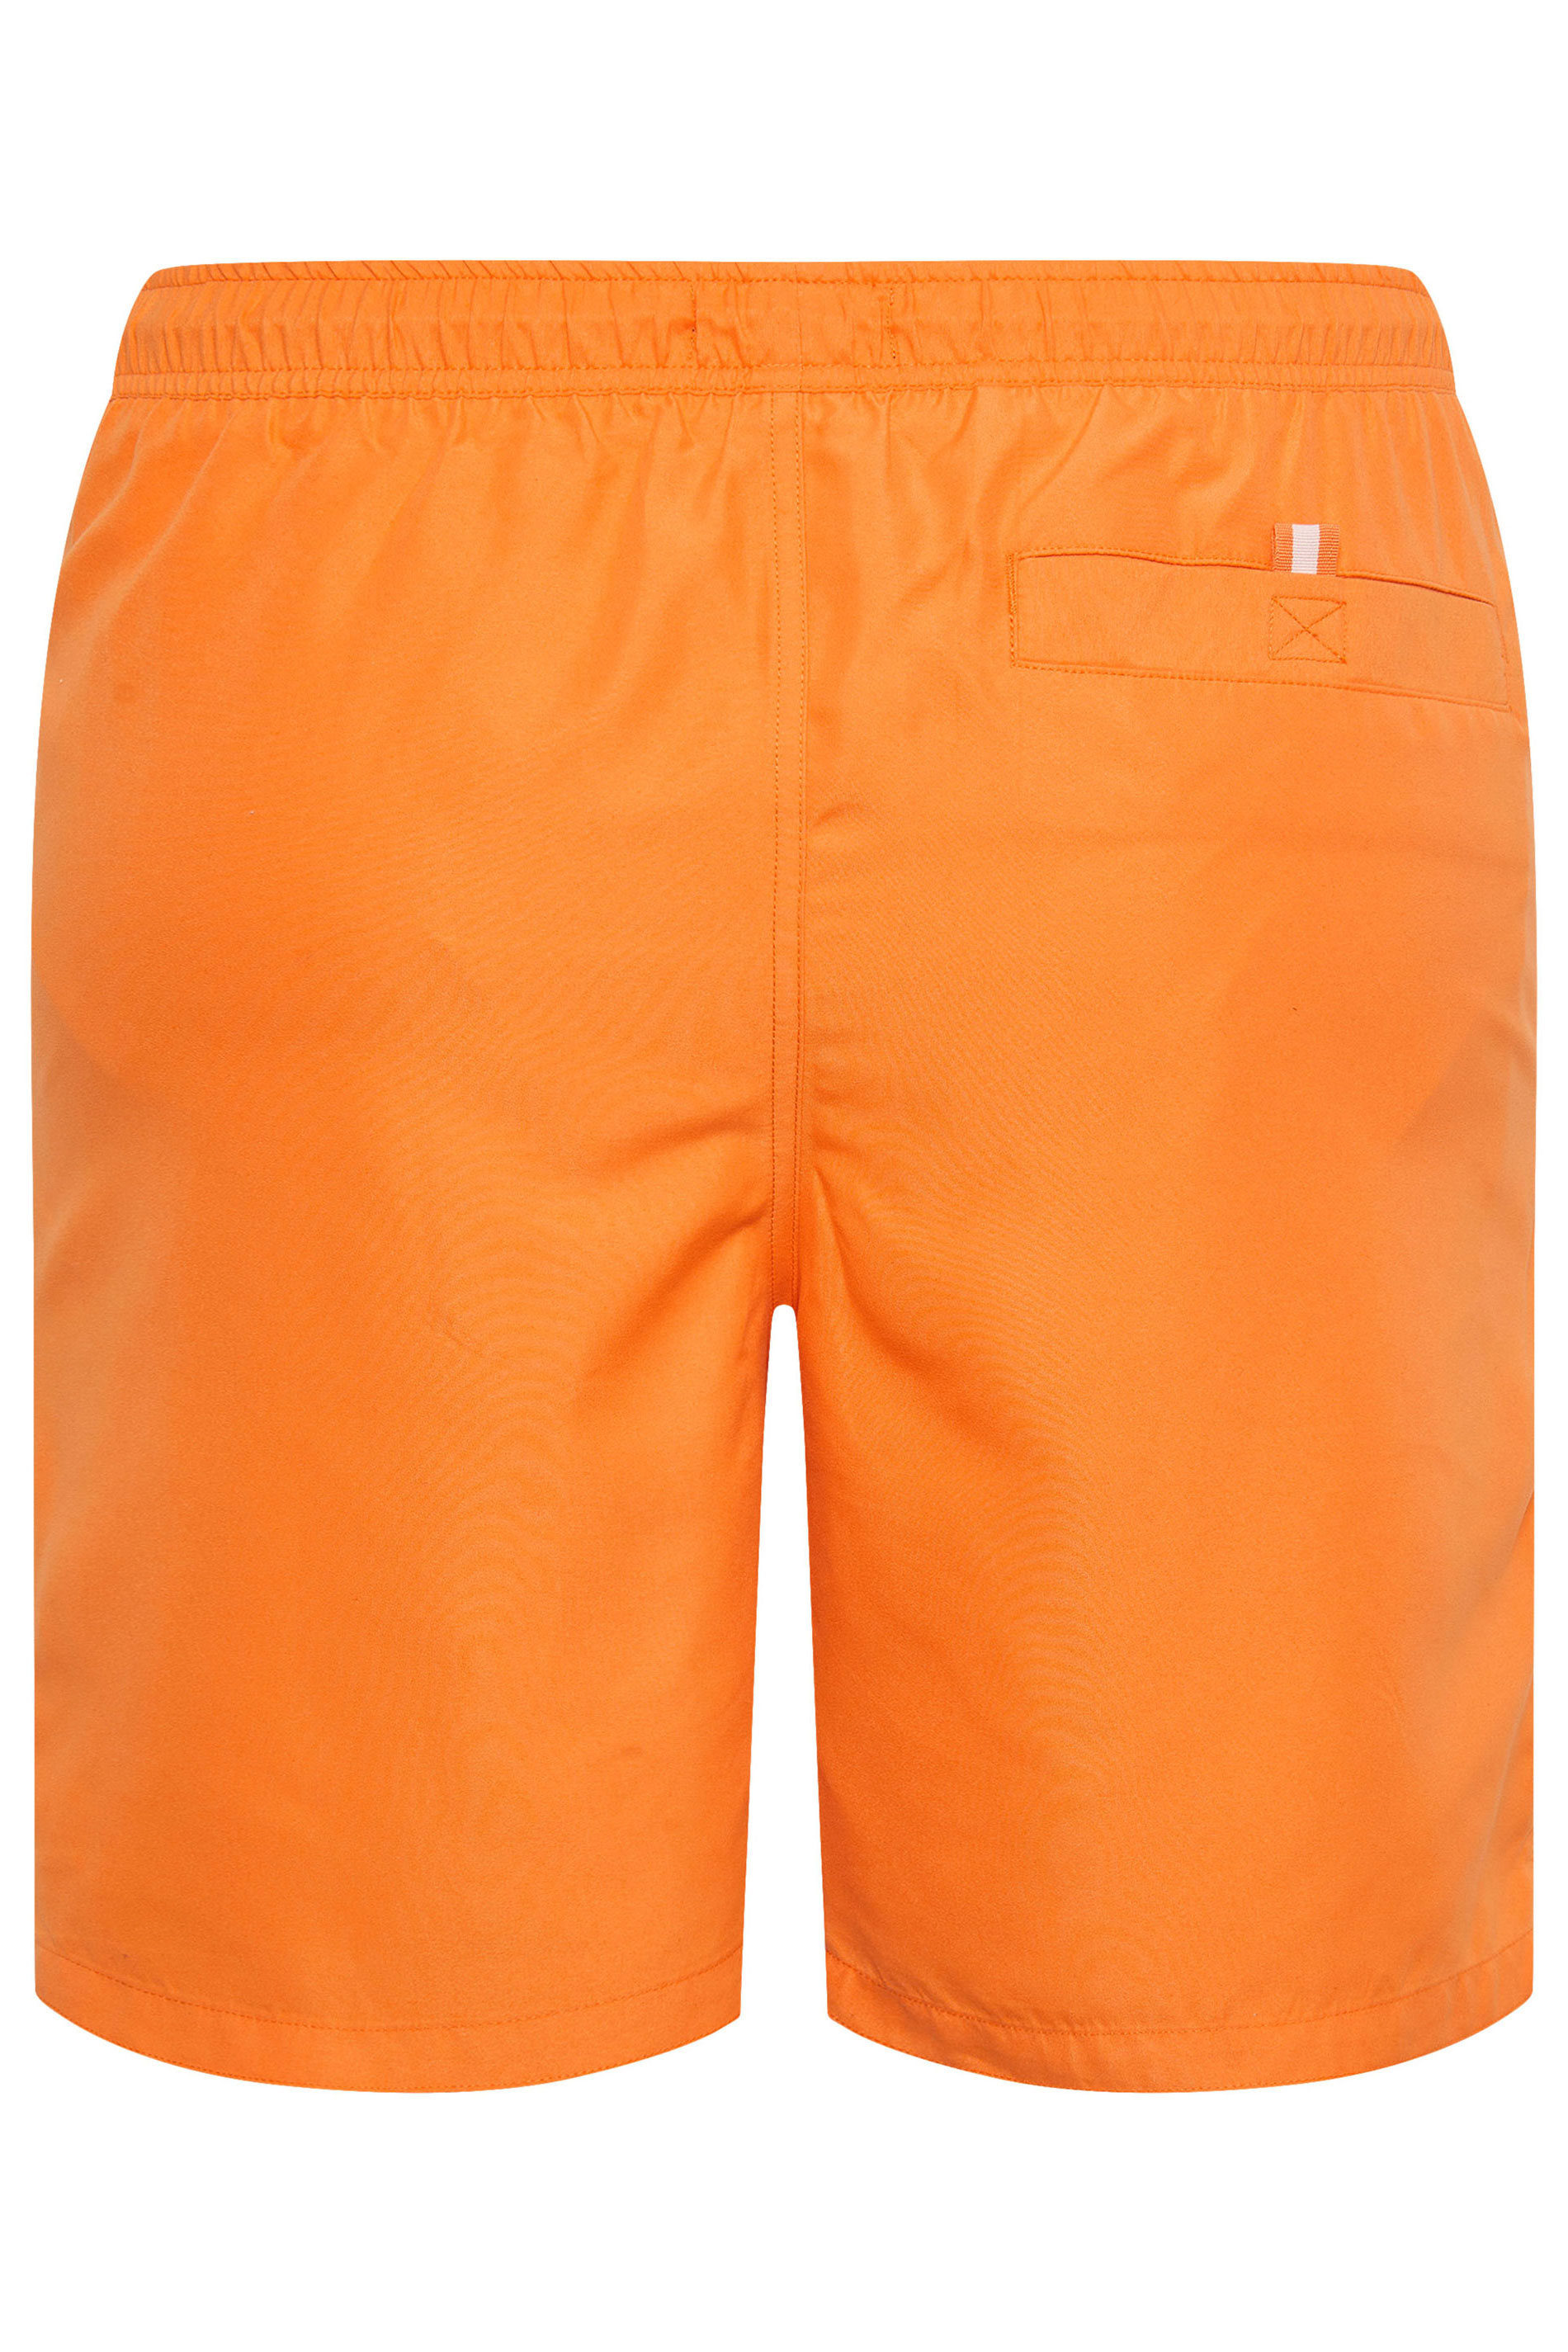 Knot Bodhie swim shorts - Orange